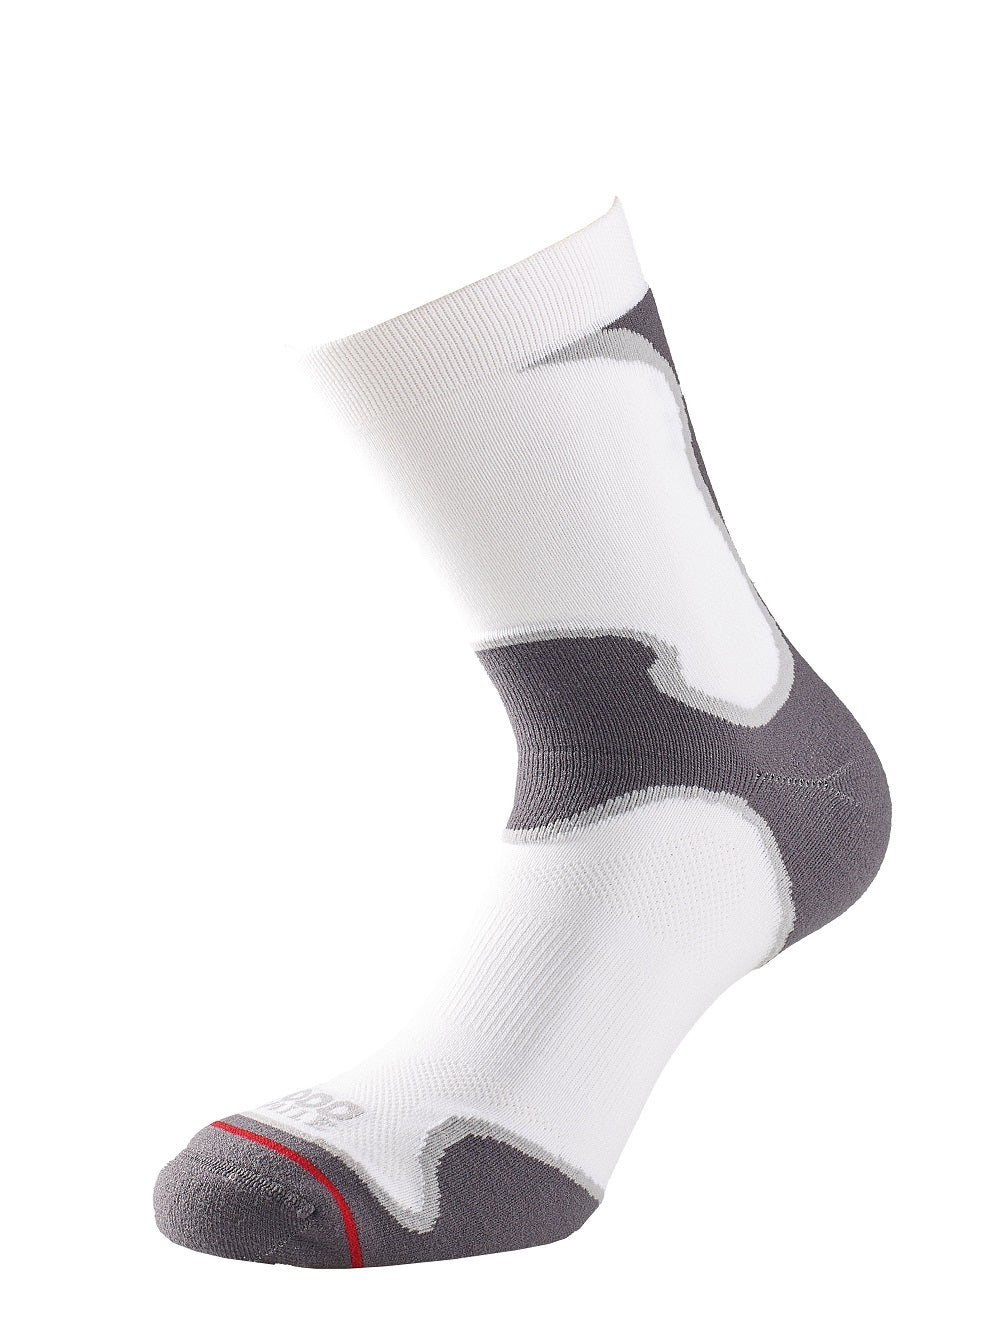 1000 mile fusion sock in white